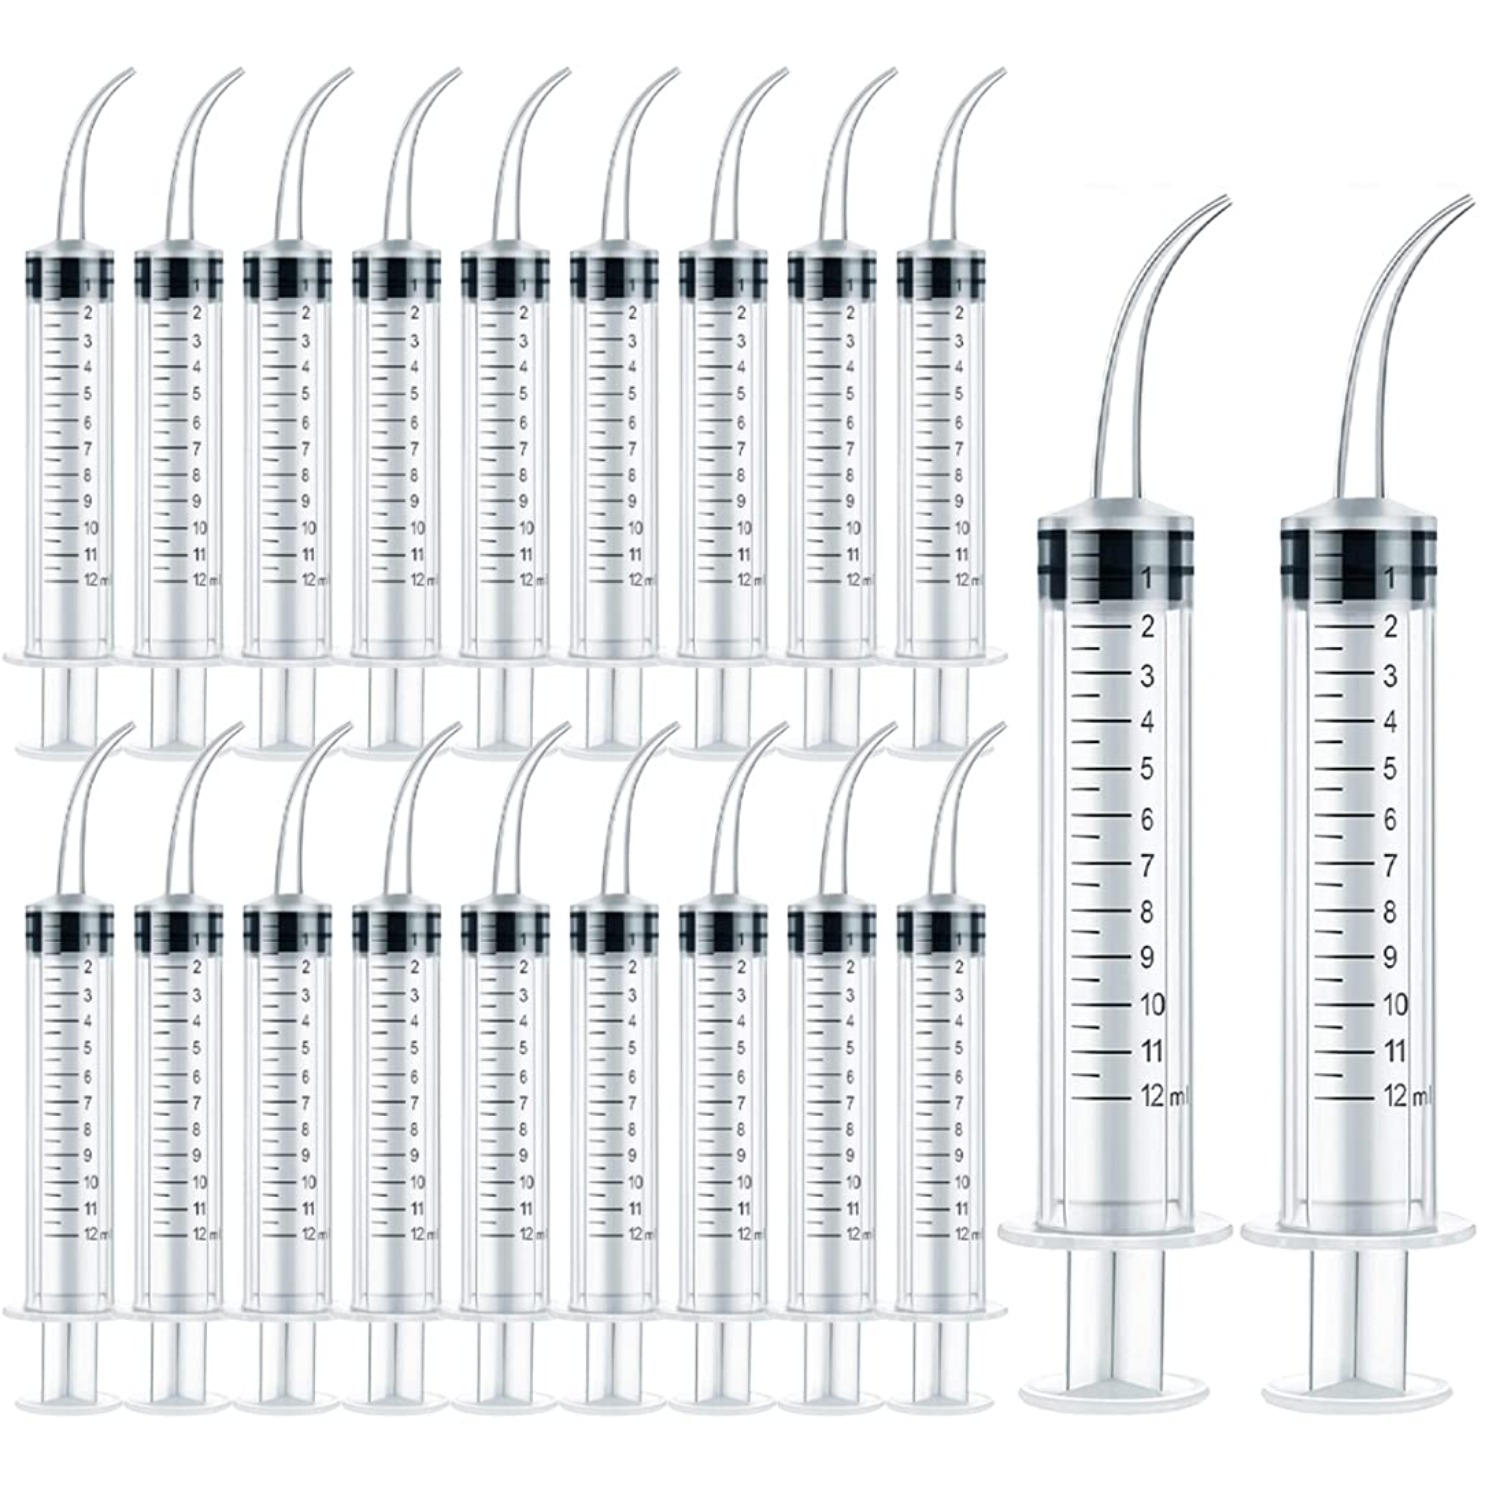 12cc Luer Lock Syringes - American Dental Accessories, Inc.